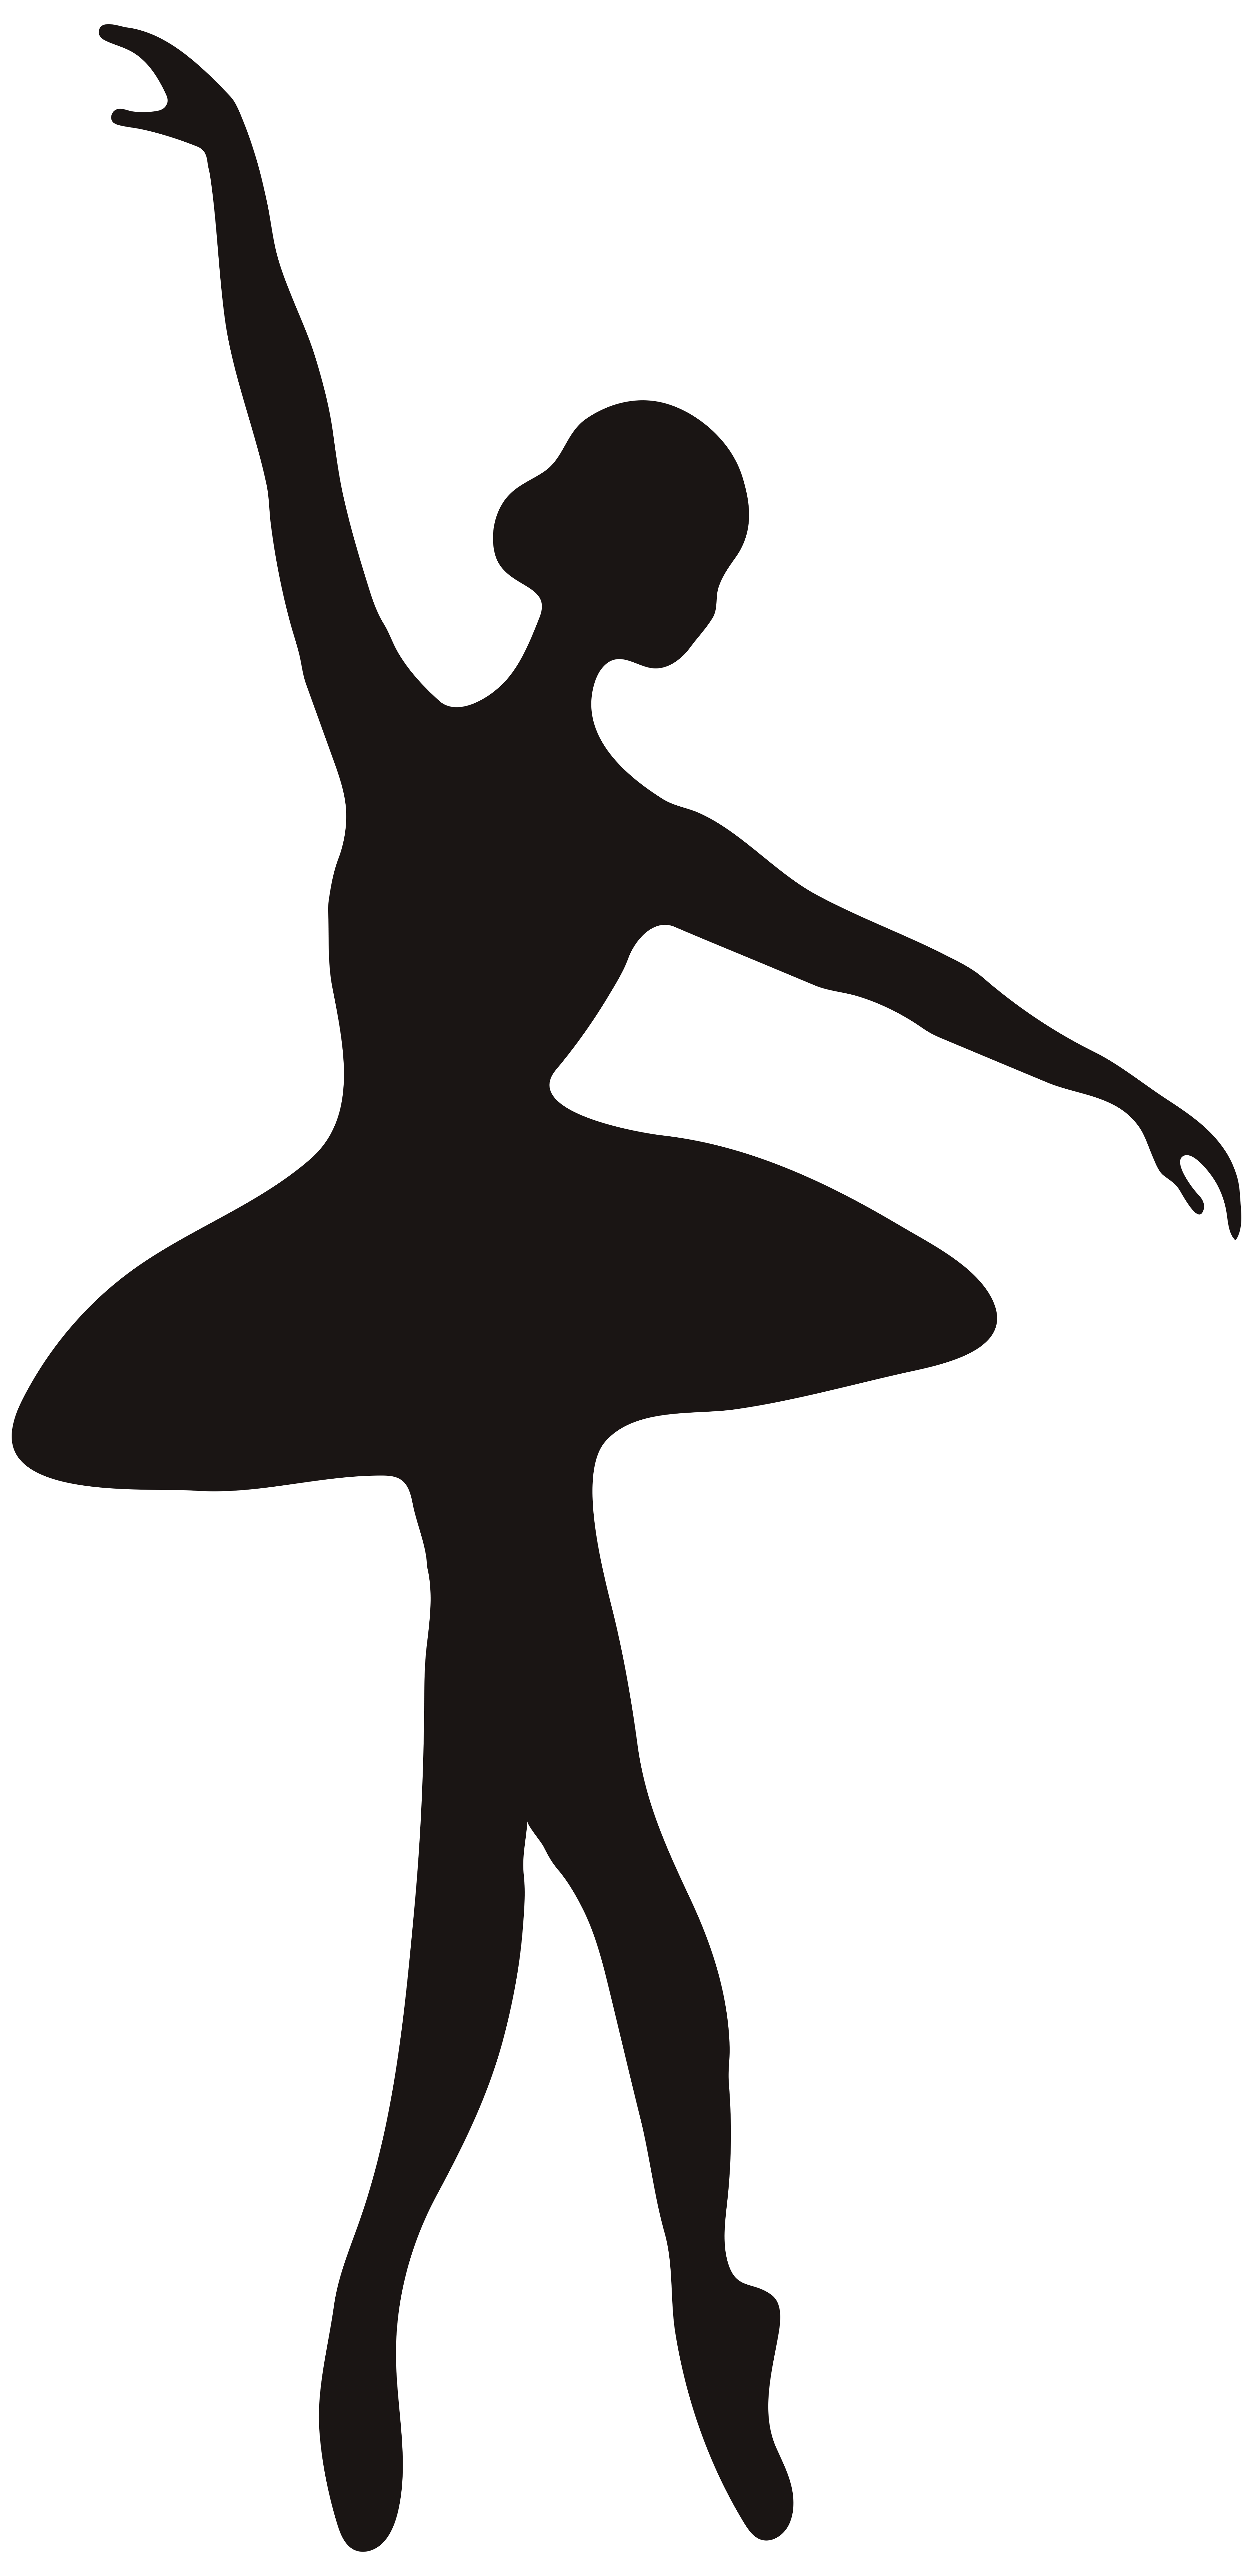 Baile Pose Silueta De Ballet Descargar Pngsvg Transparente | Images and ...